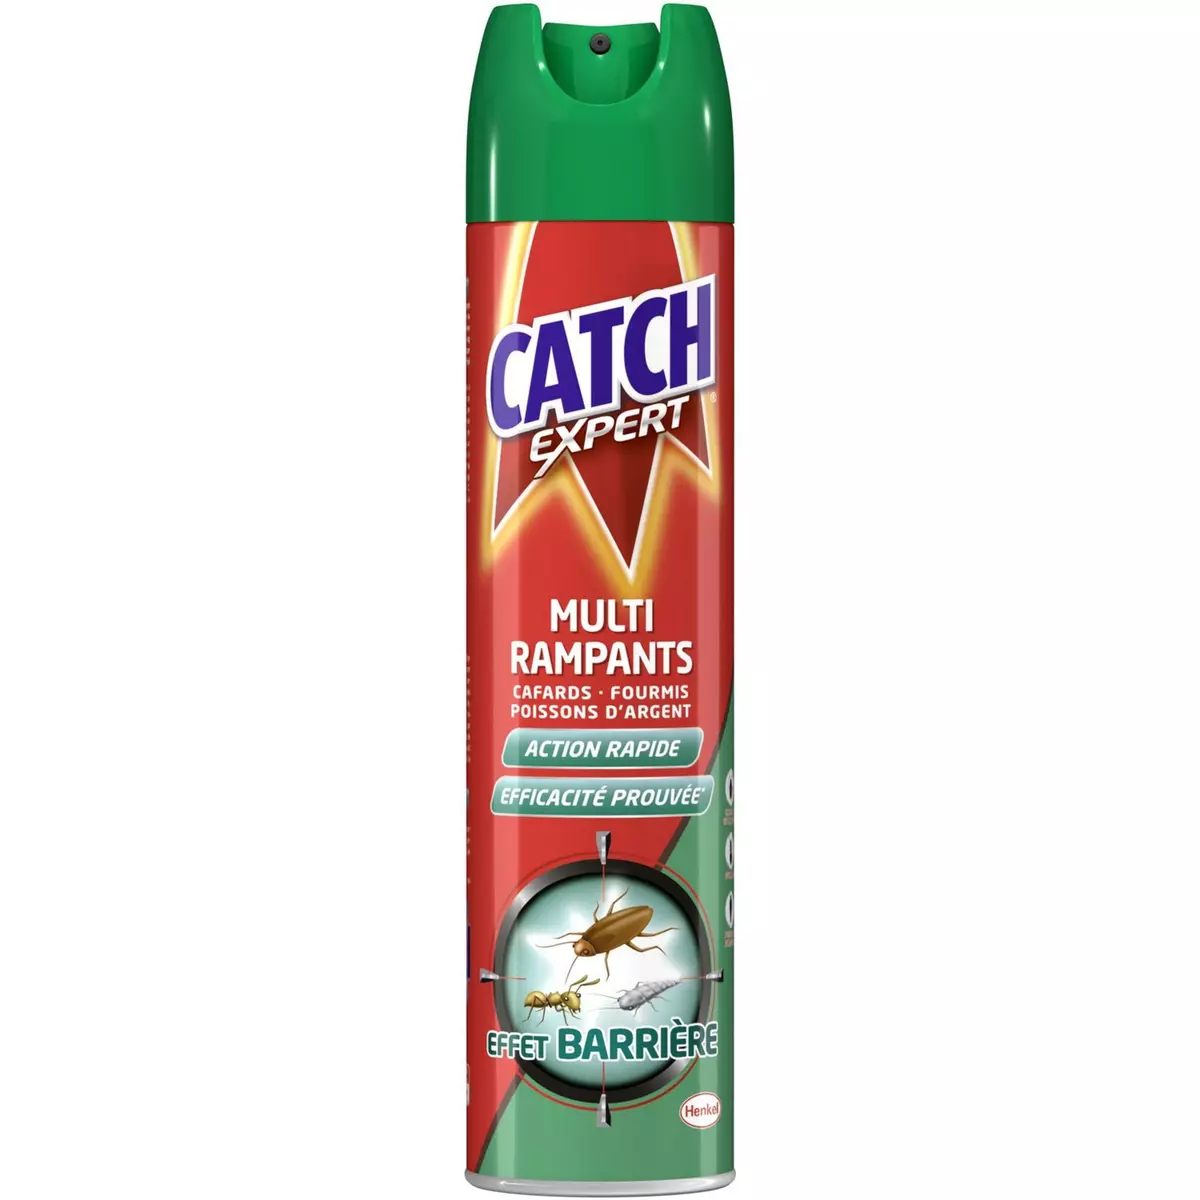 CATCH Insecticide action rapide multi rampants effet barrière 300ml